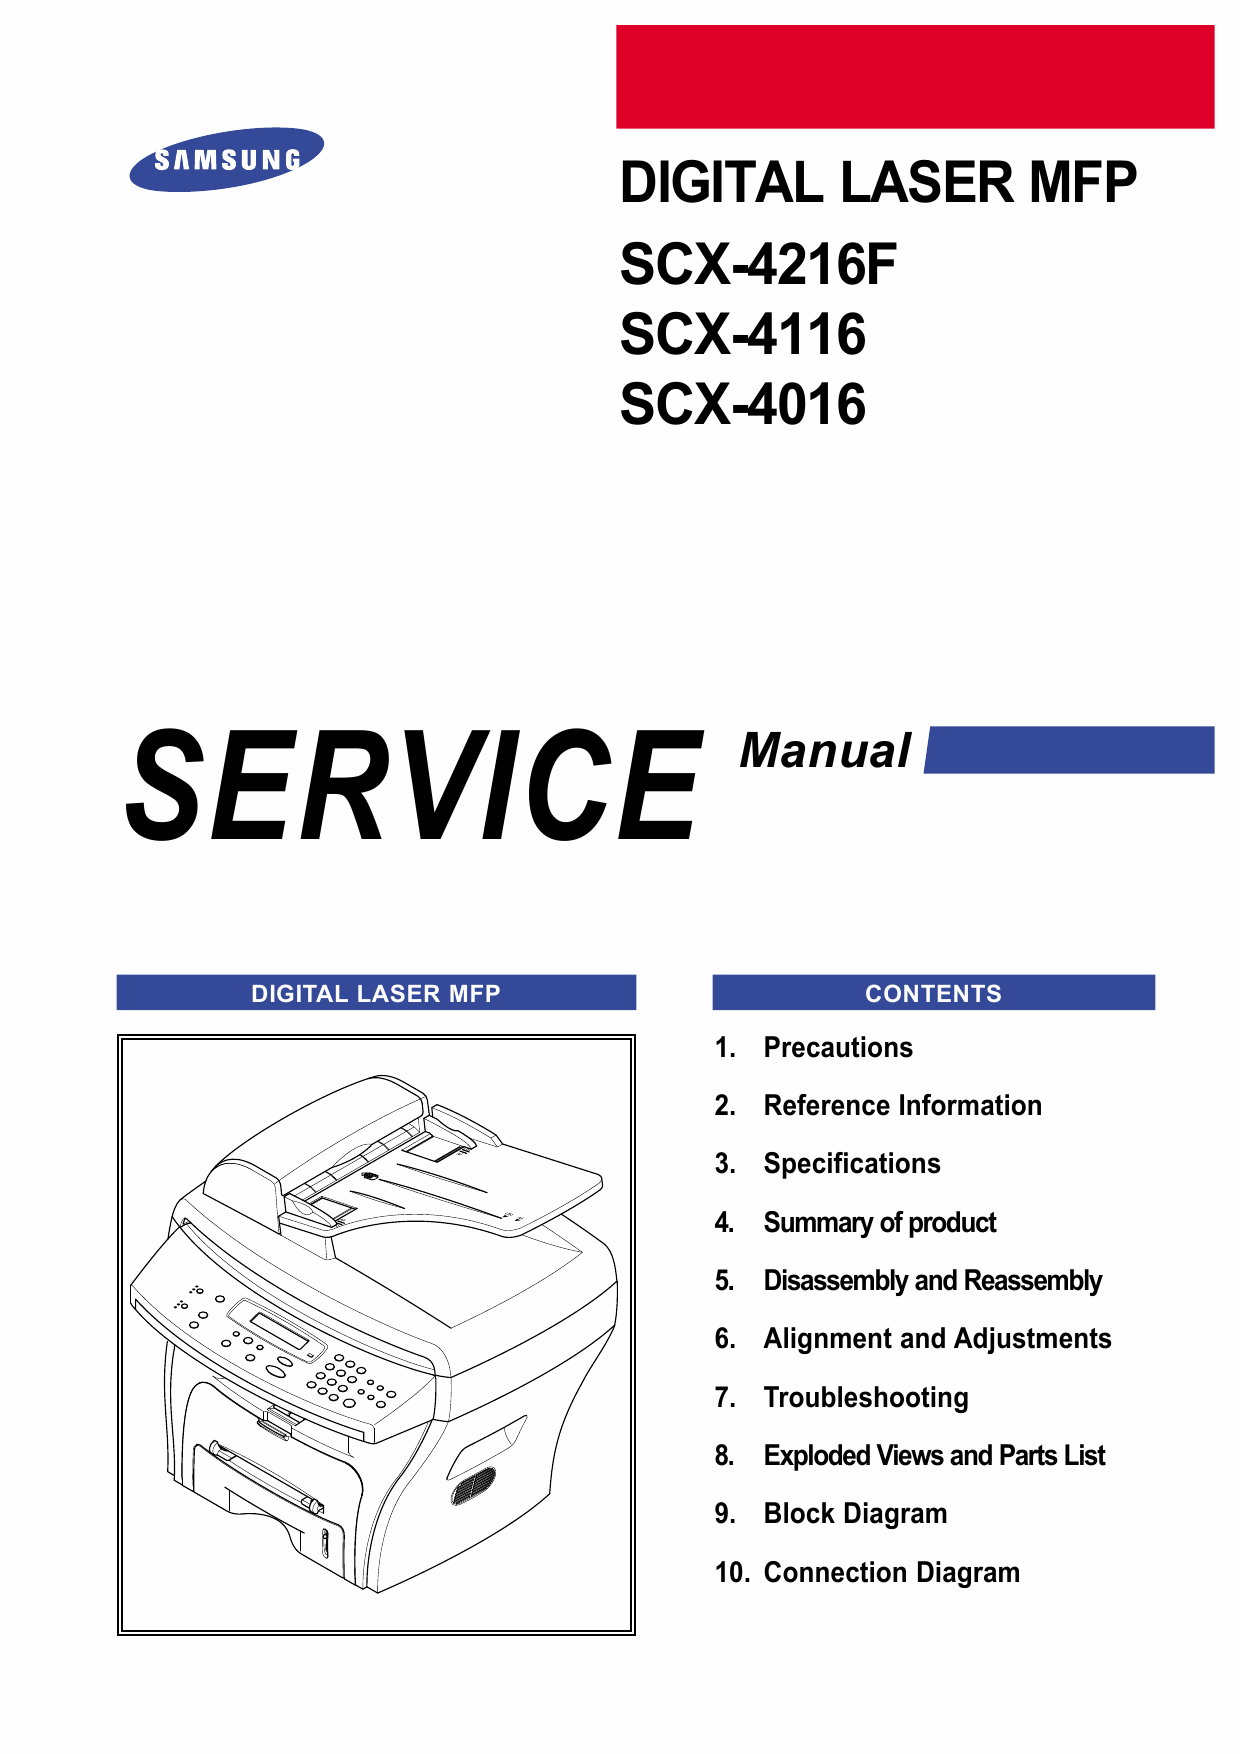 Samsung Digital-Laser-MFP SCX-4216F 4116 4016 Parts and Service Manual-1